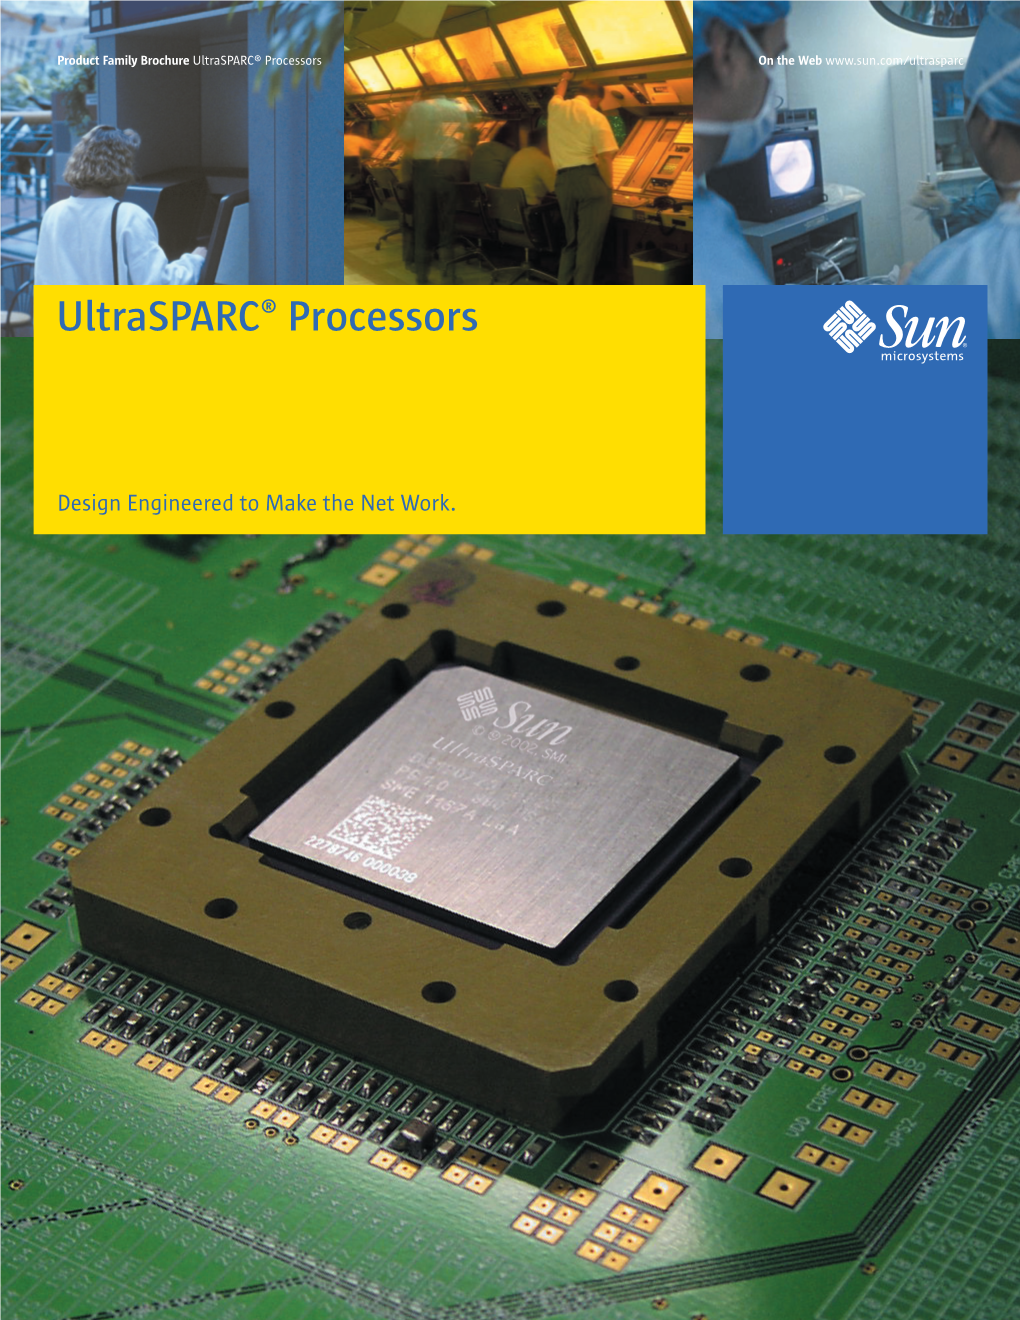 Ultrasparc Product Family Brochure